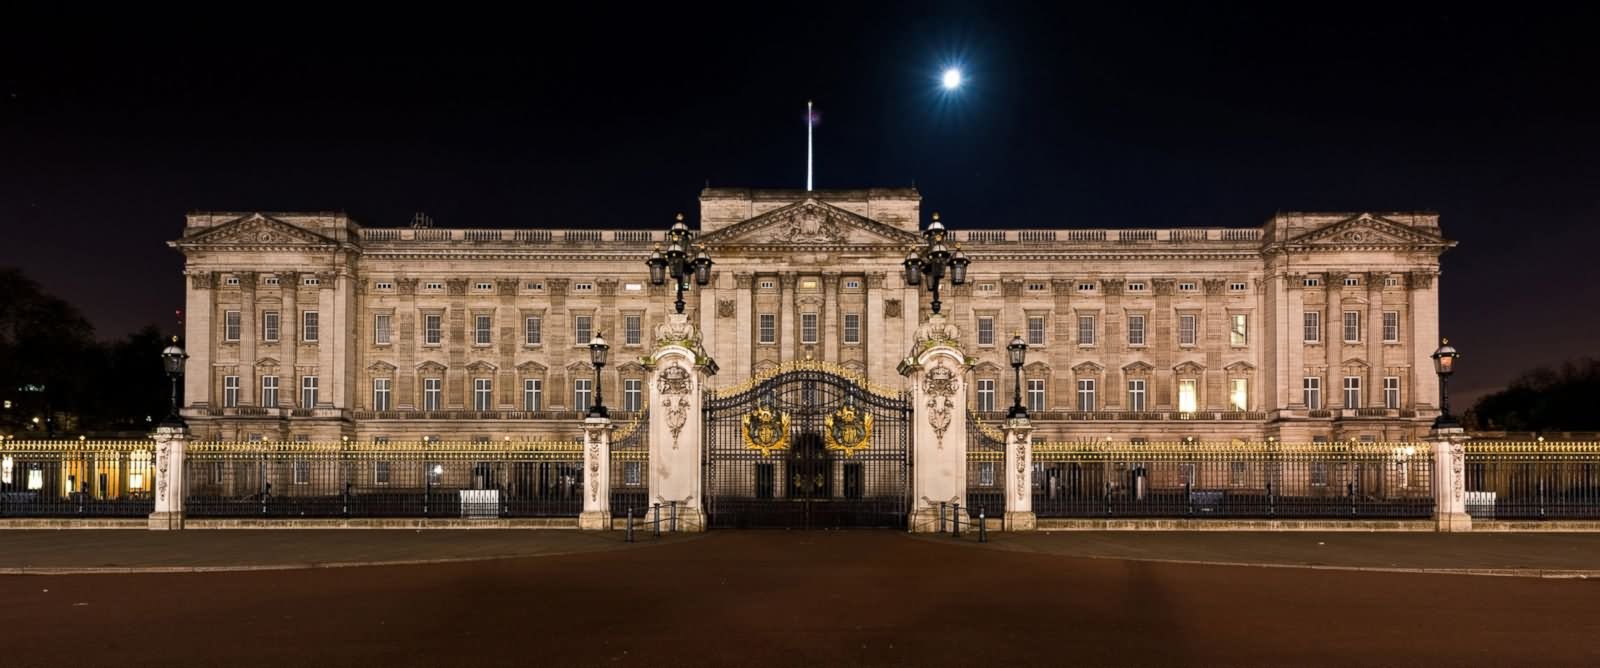 Night View Of The Buckingham Palace